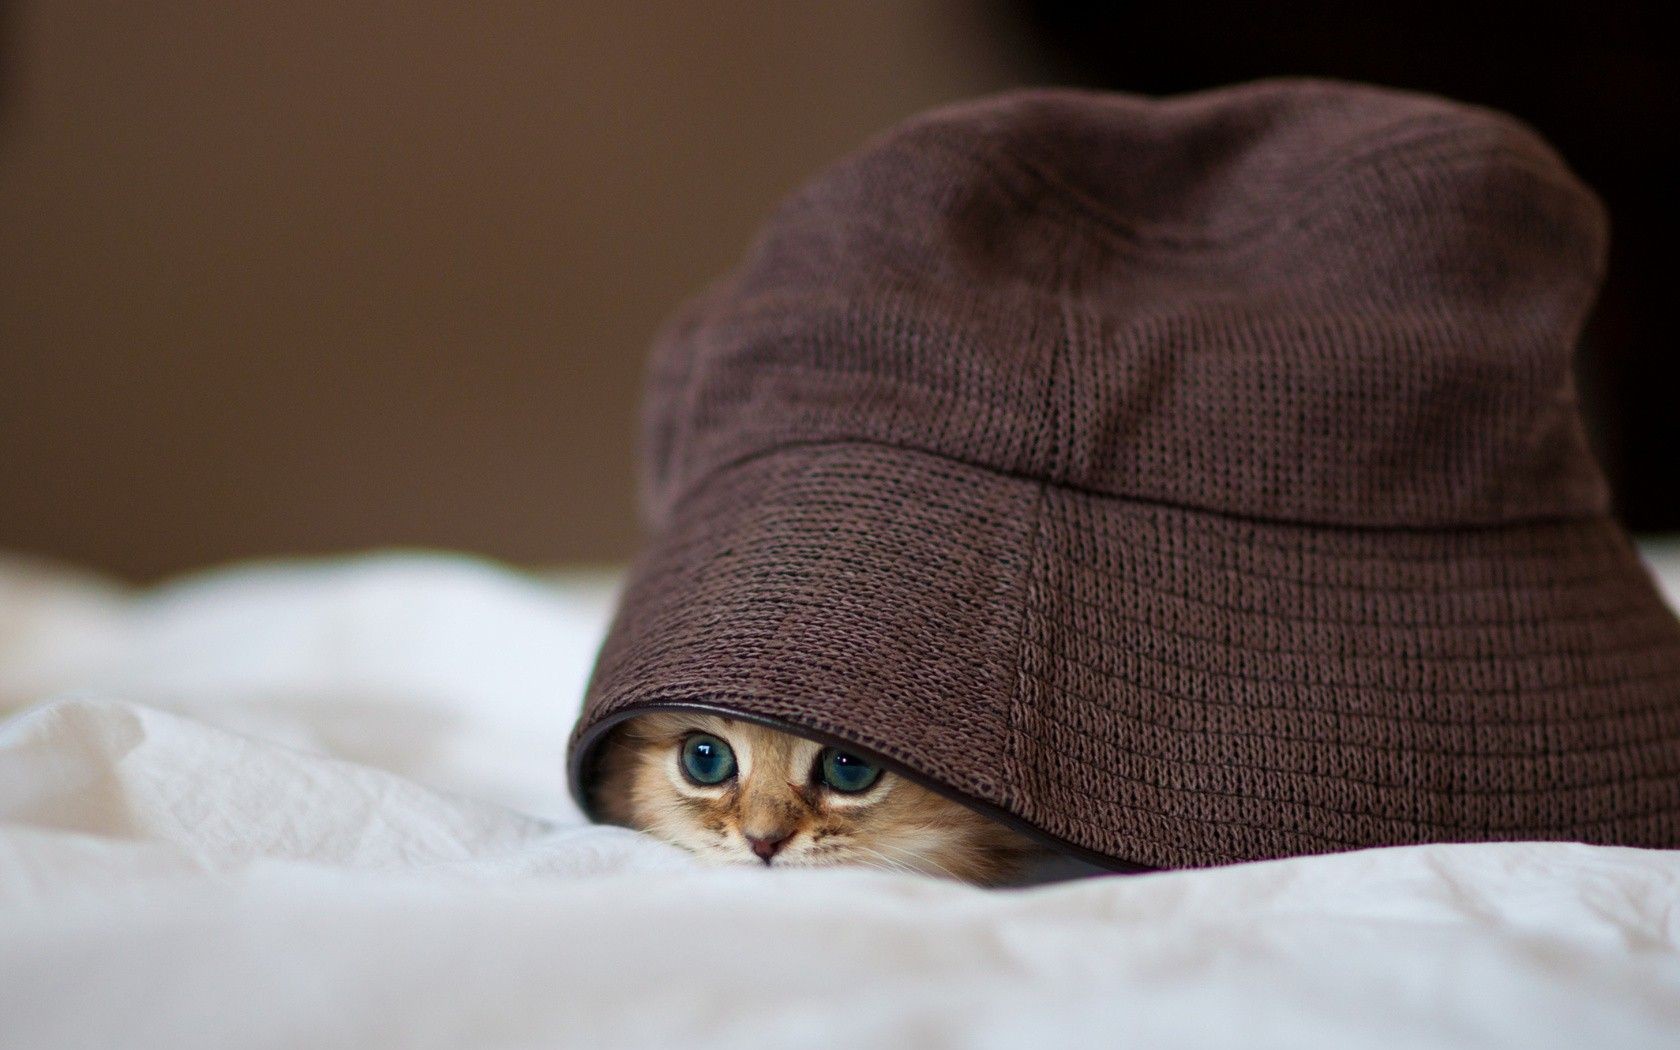 Animals Cats Pet Kittens Hat Blankets Depth Of Field Hiding Woolen Blue Eyes Ben Torode 1680x1050